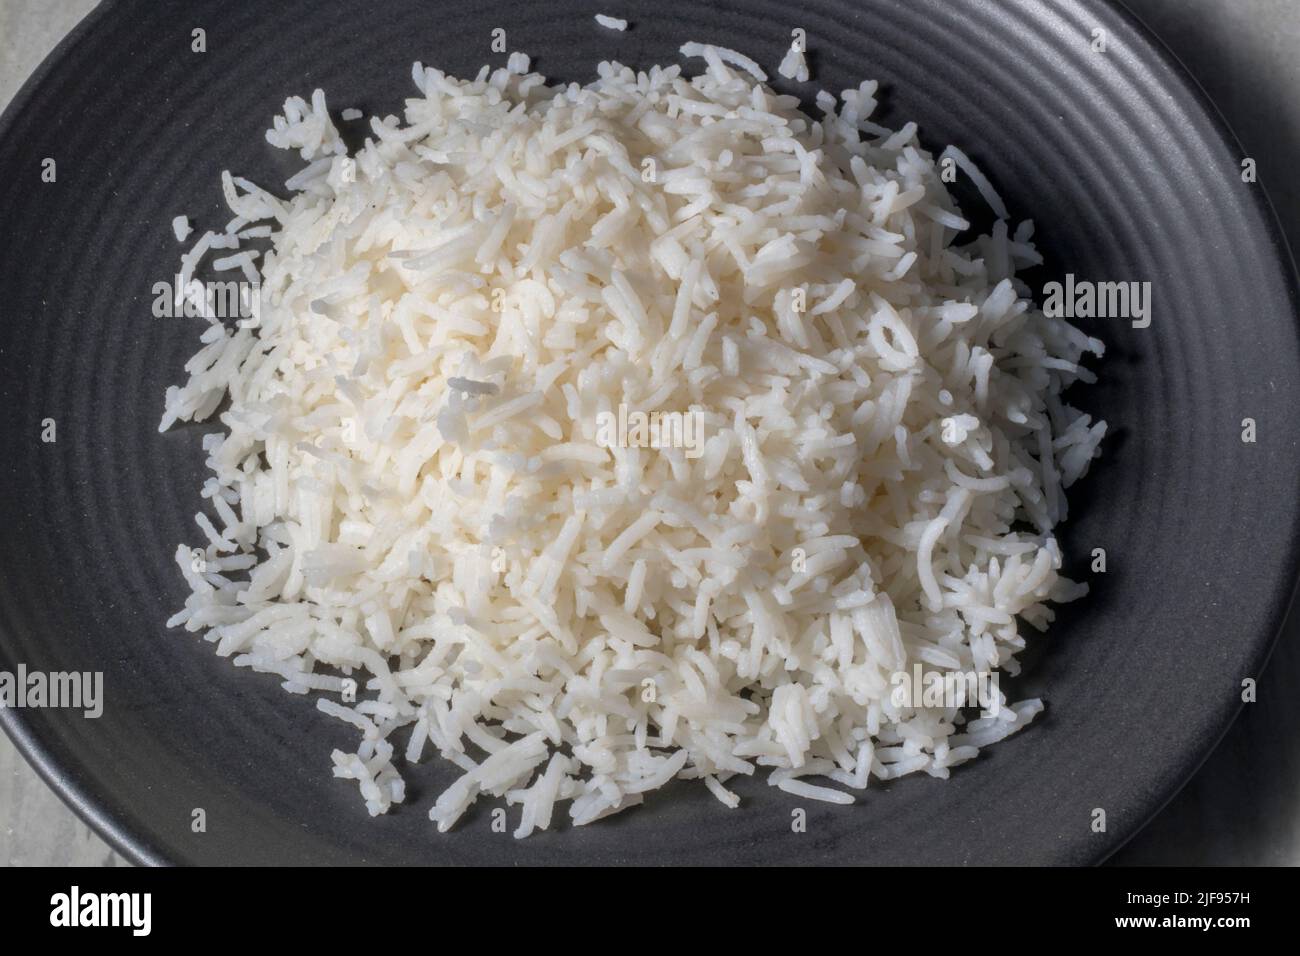 Basmati Rice on a black ceramic plate. Stock Photo